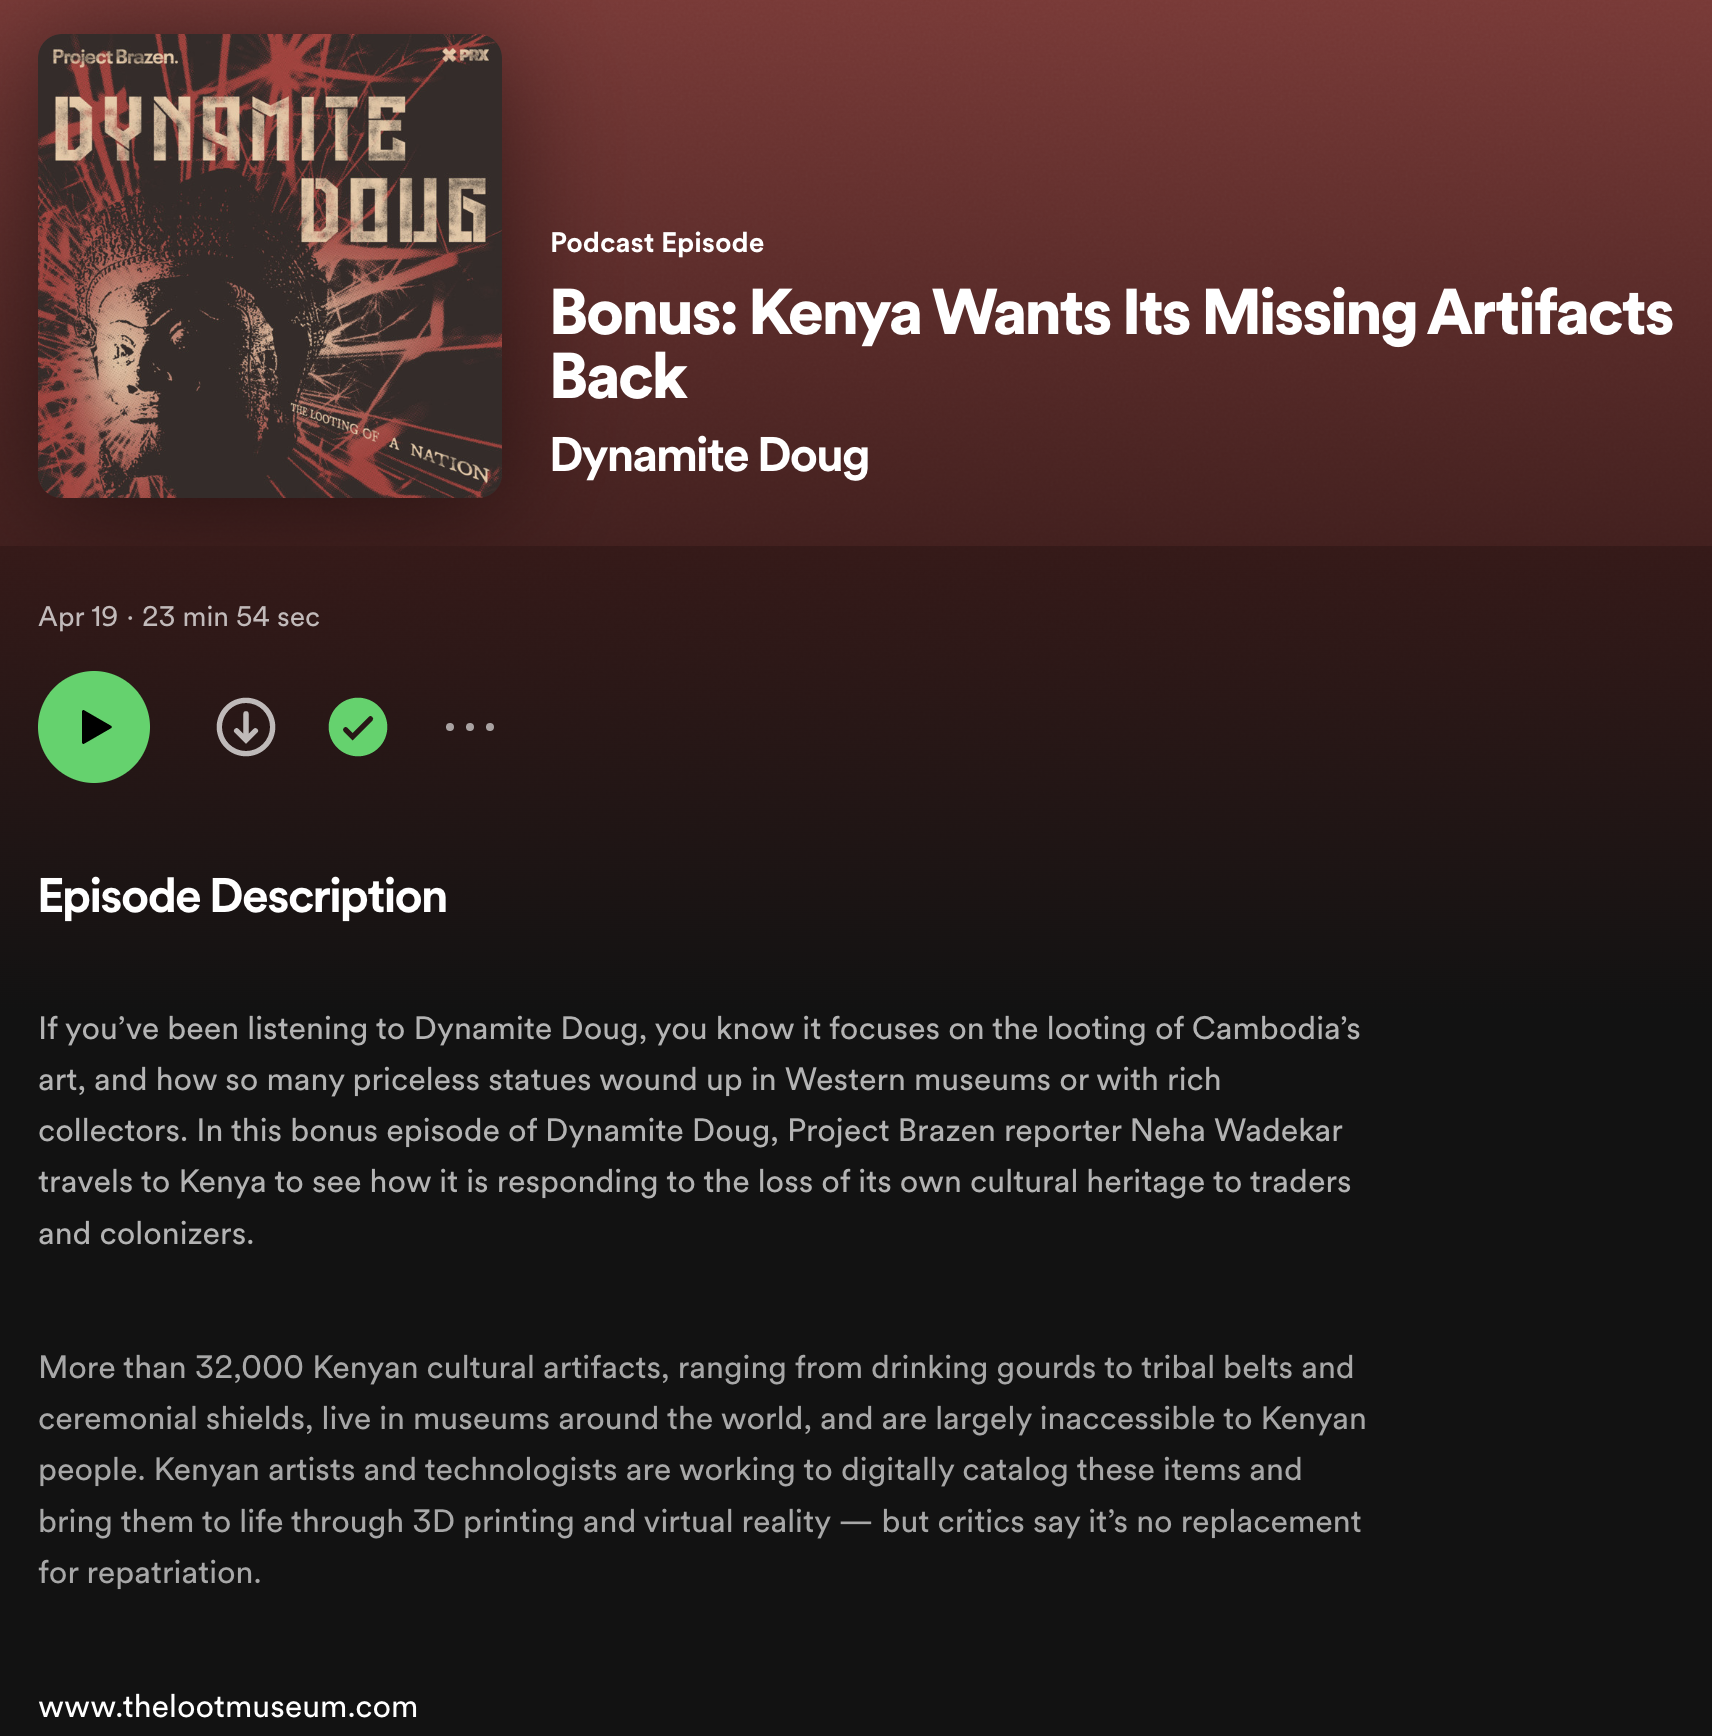 Dynamite Doug Bonus: Kenya Wants Its Missing Artifacts Back – Project Brazen (image)